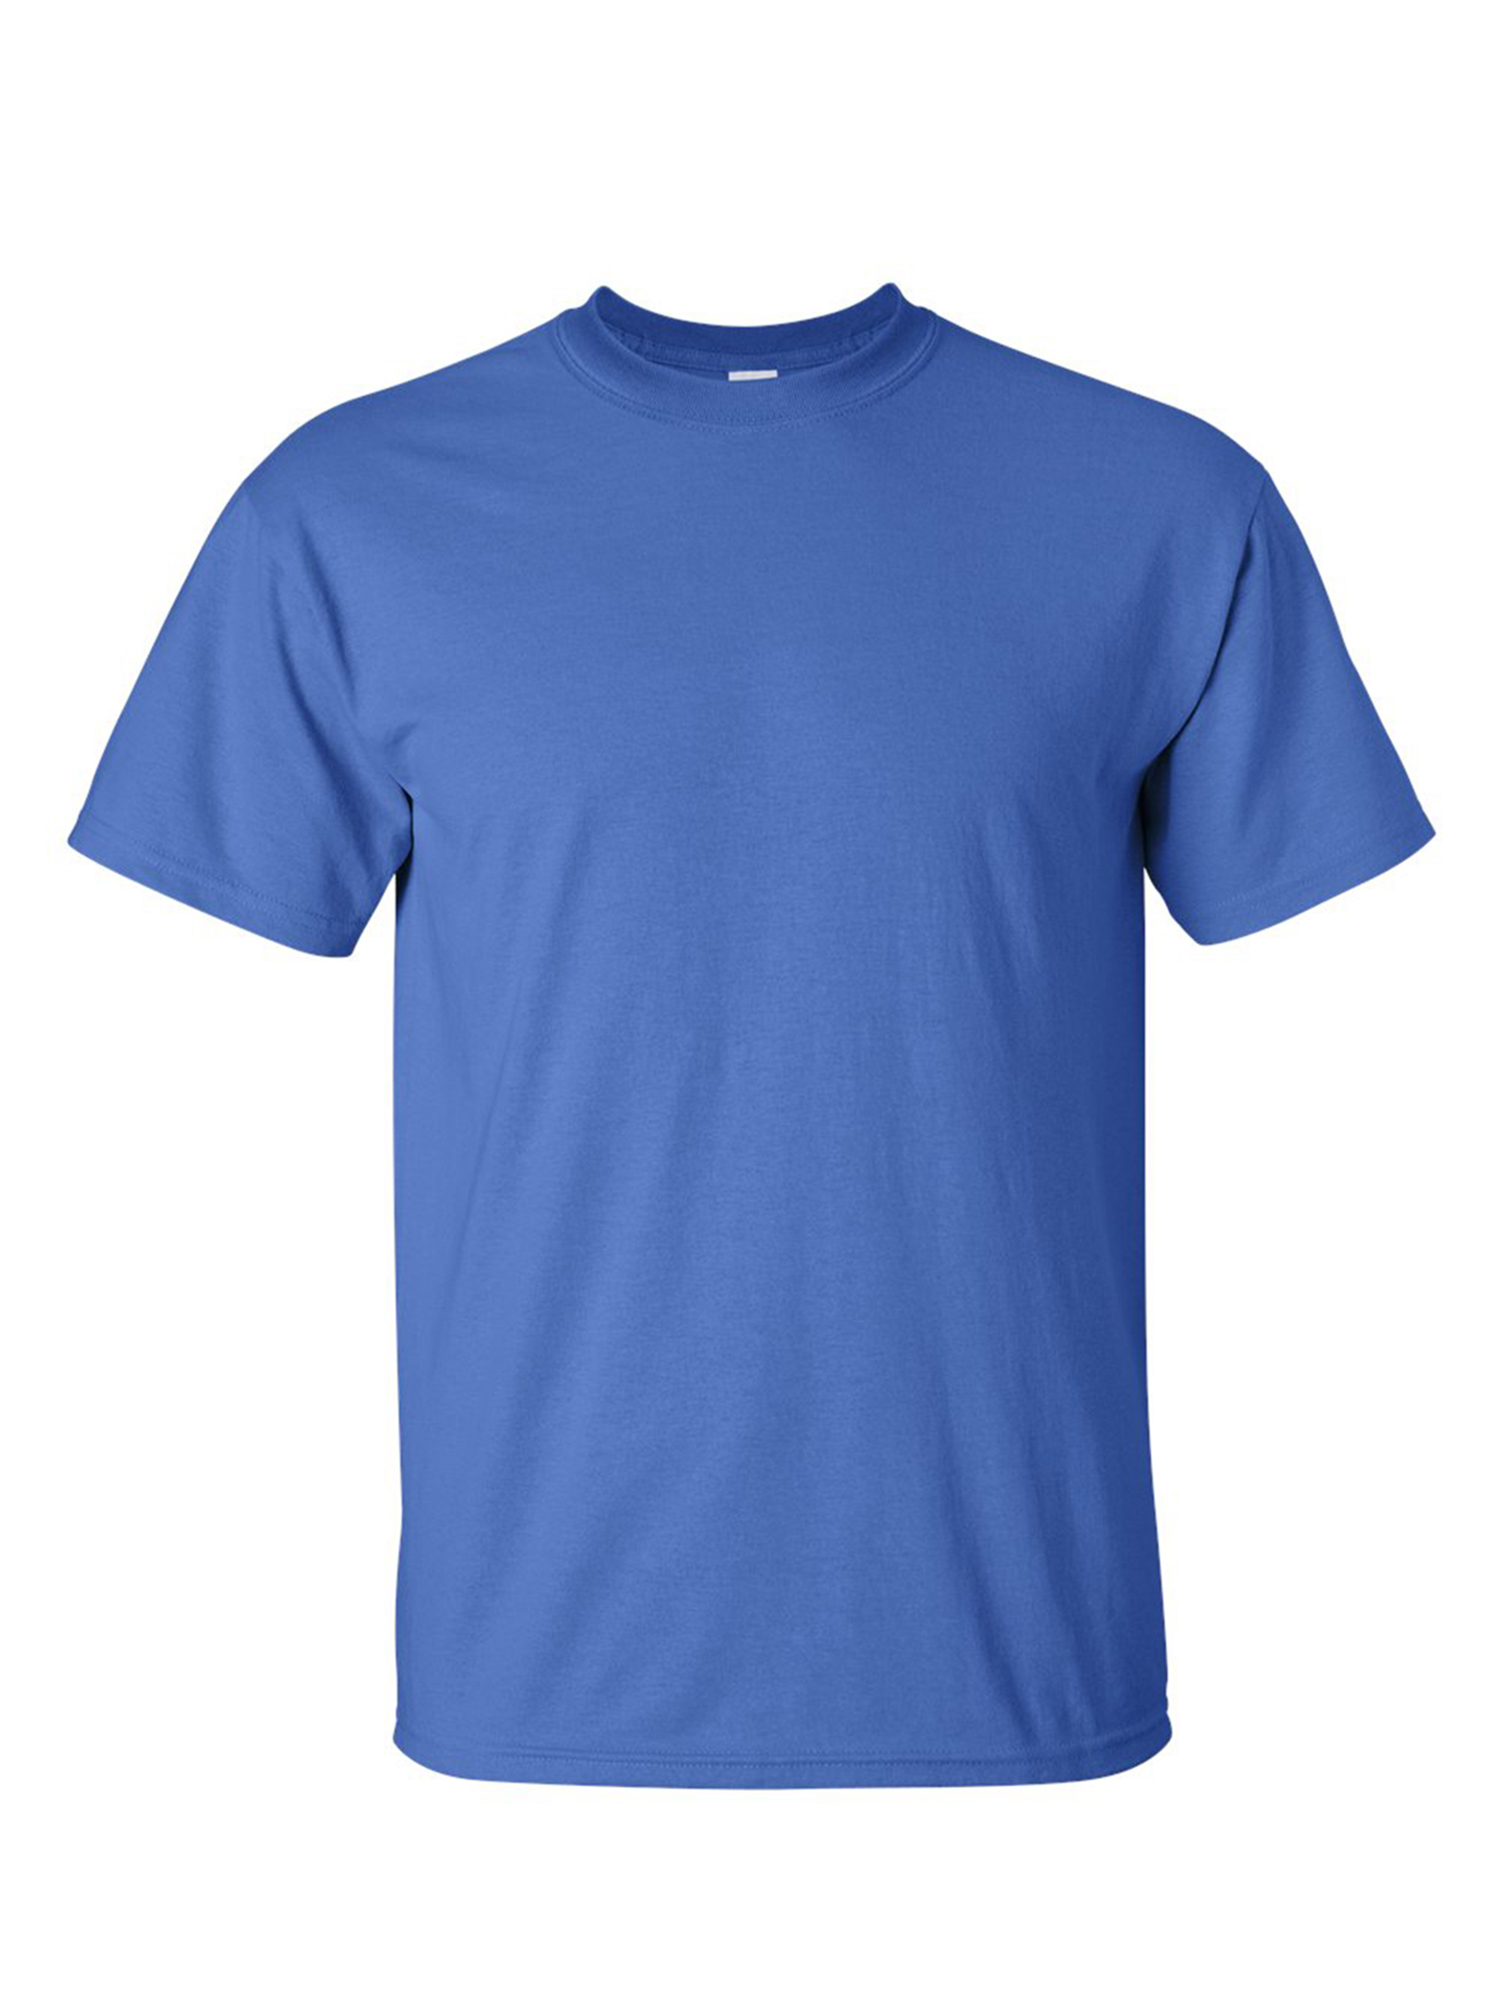 Big and Tall T Shirt for Men Tall Sizes Gildan Ultra Cotton Tall T-Shirt - 2000T Royal T shirts XLT T Shirts for Men 2XLT 3XLT Big & Tall T Shirts Tall Mens Shirts Big & Tall T Shirts - image 1 of 2